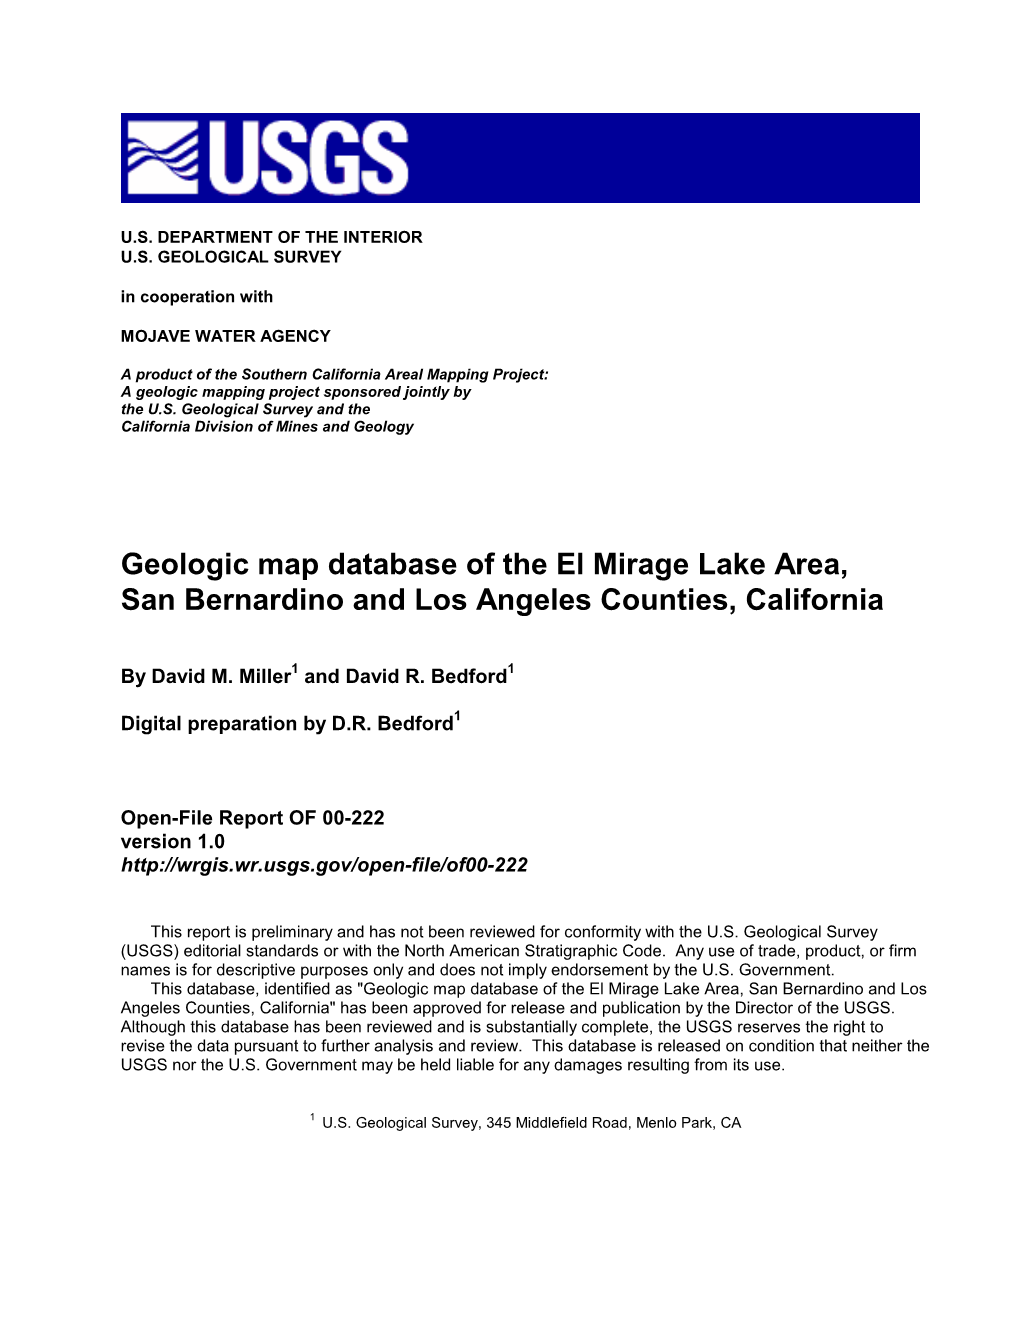 Geologic Map Database of the El Mirage Lake Area, San Bernardino and Los Angeles Counties, California